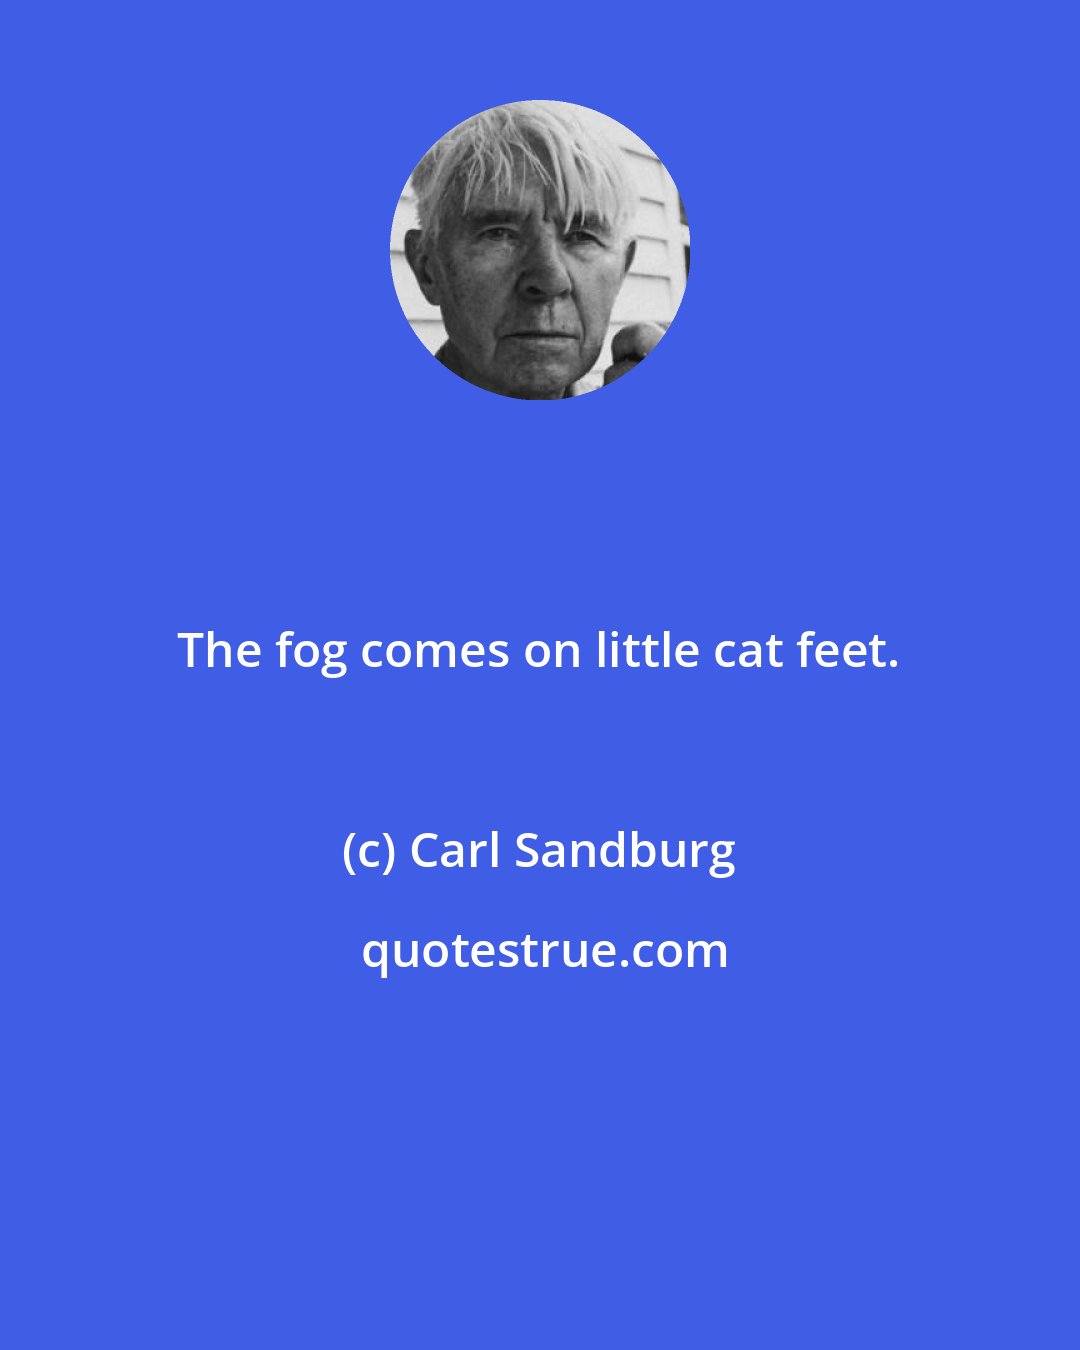 Carl Sandburg: The fog comes on little cat feet.